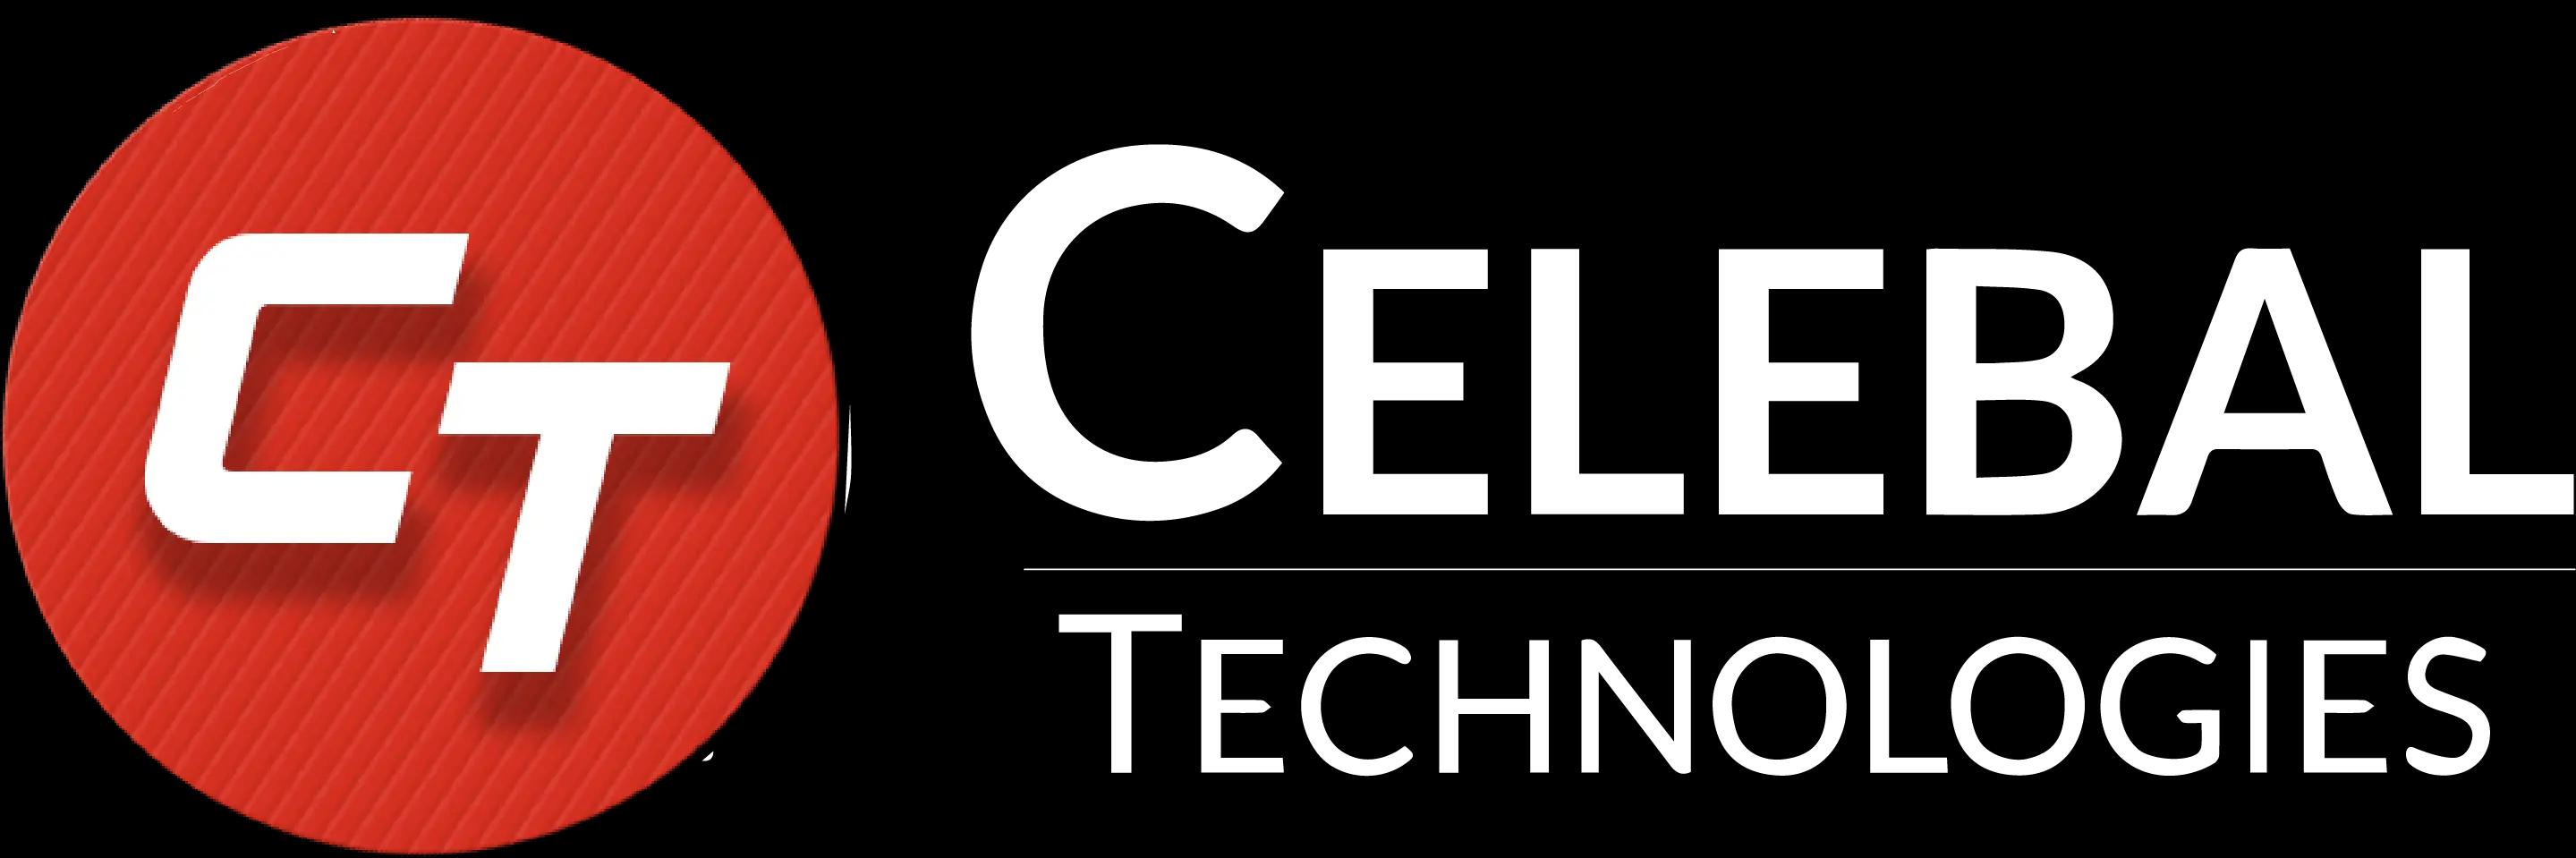 Celebal Technologies Logo